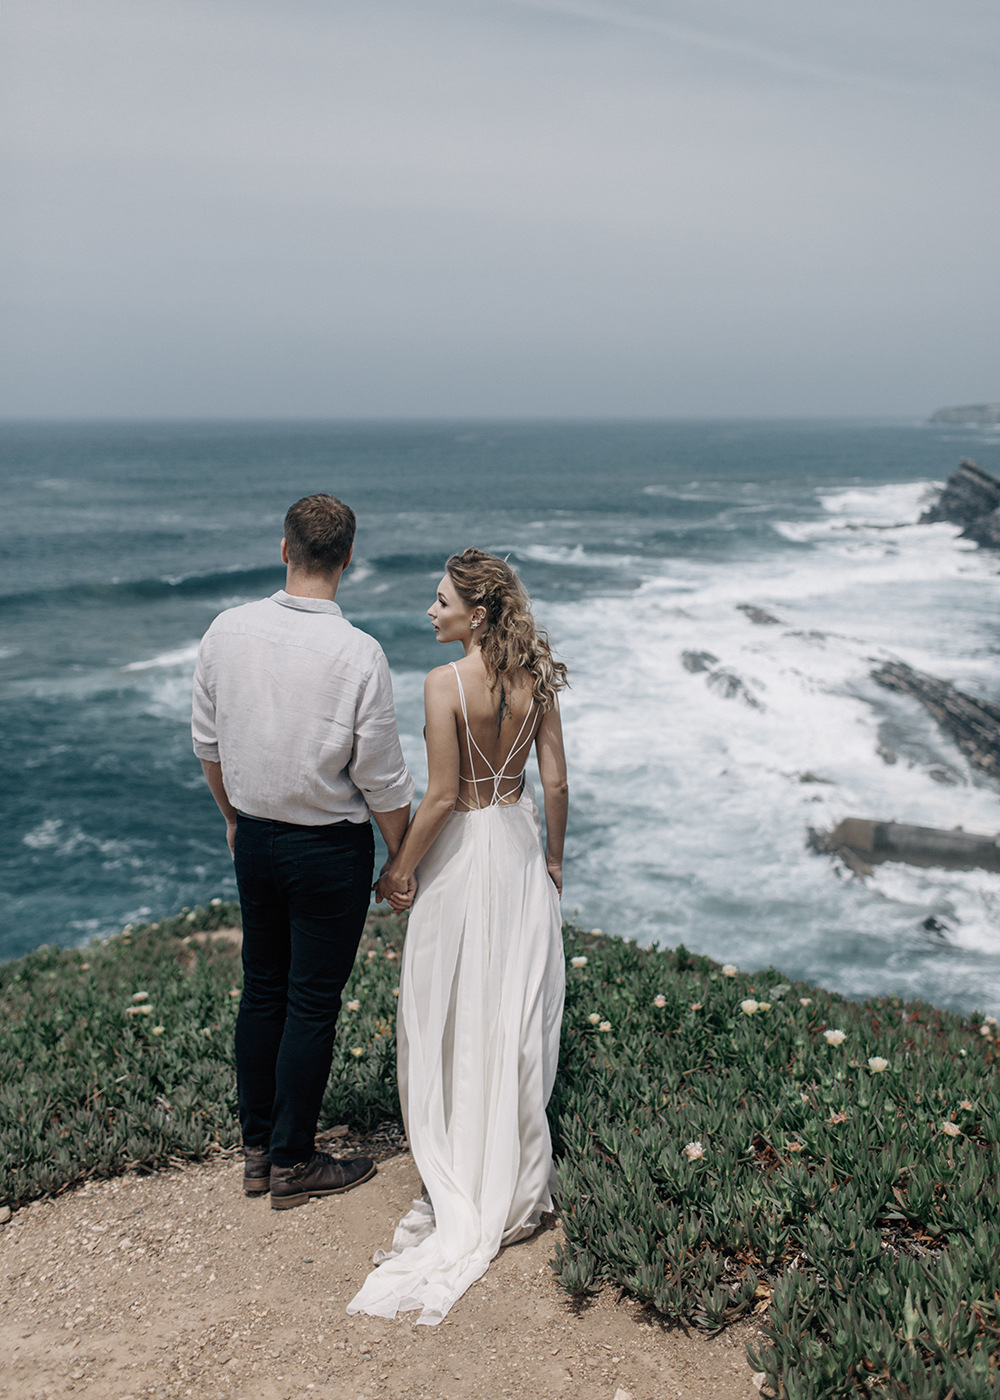 Portugal Story: свадьба для двоих в Португалии